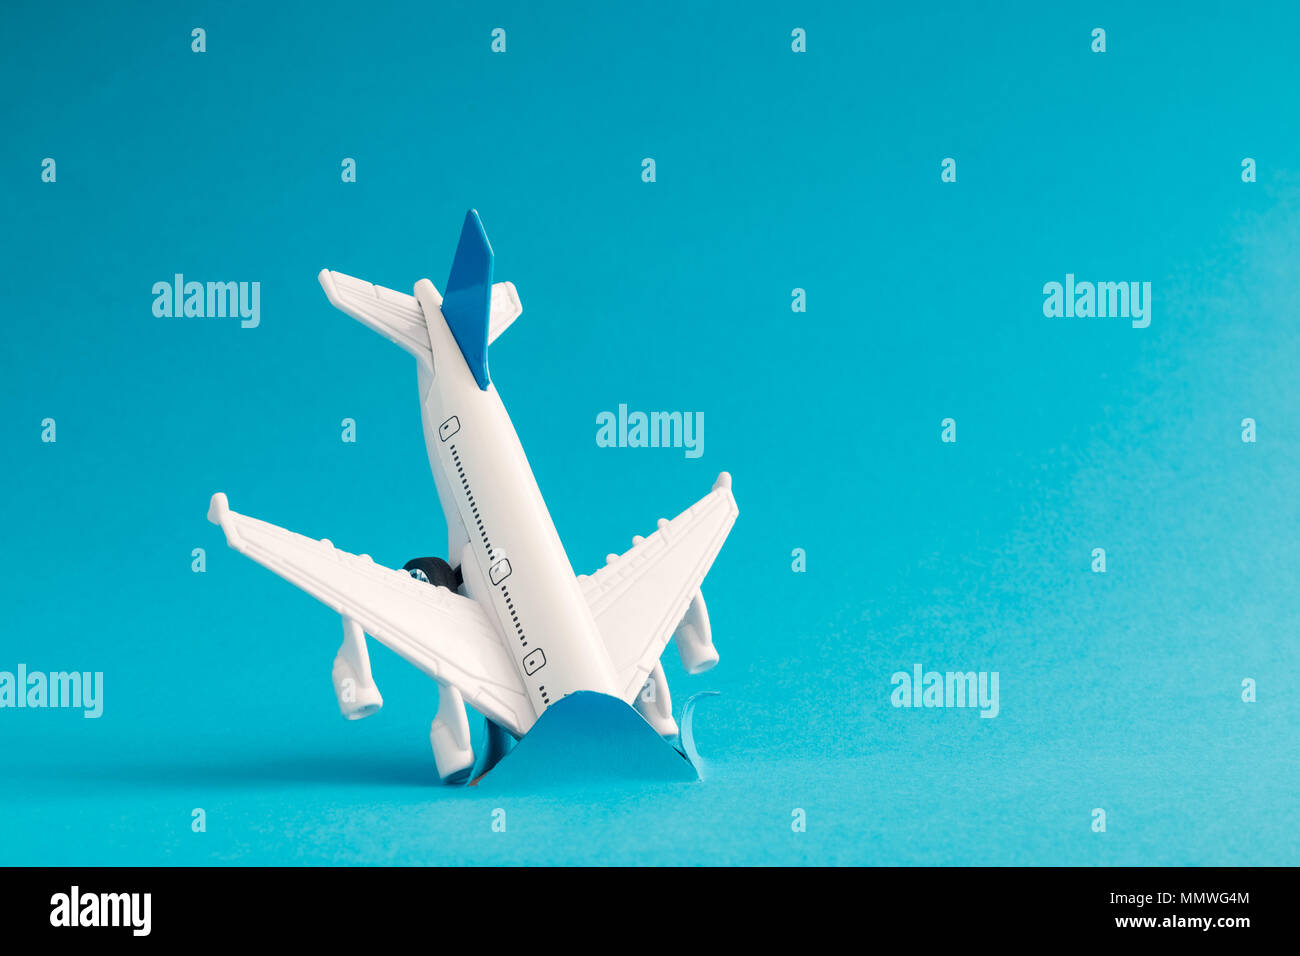 Airplane accident in ocean minimal creative concept. Stock Photo